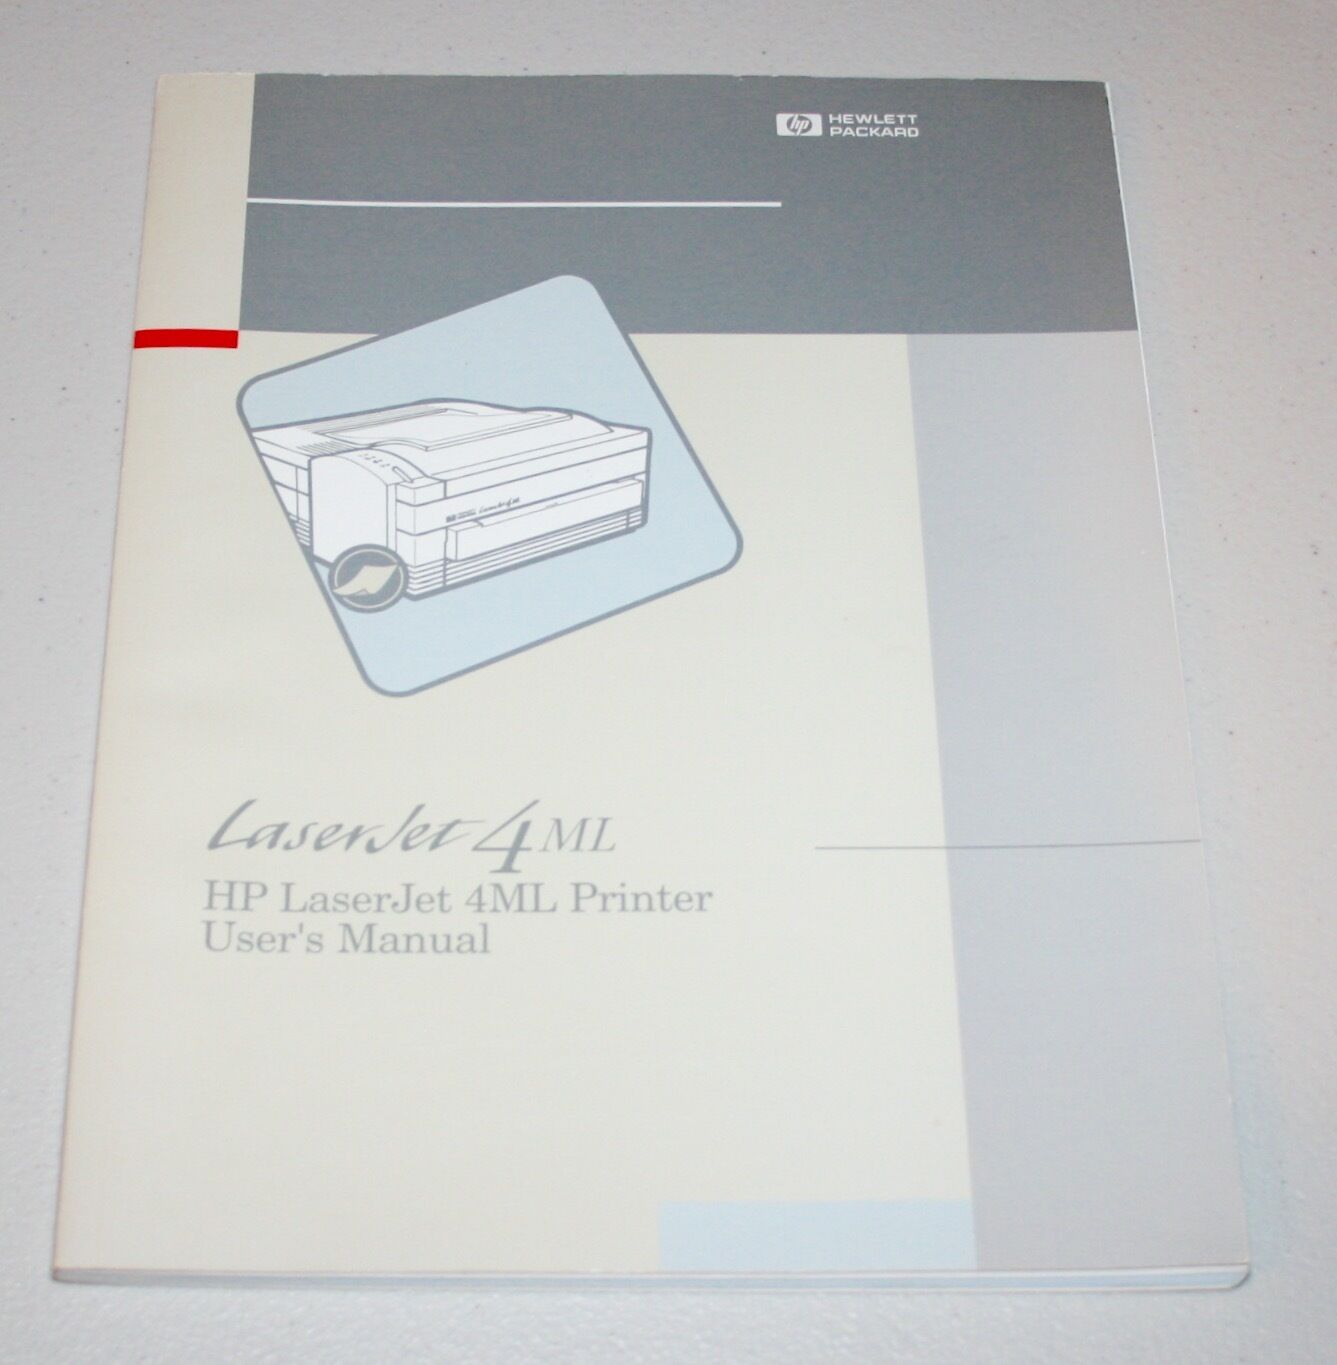 Original Users Manual for HP LaserJet 4ML Printer - From 1993 Very Nice